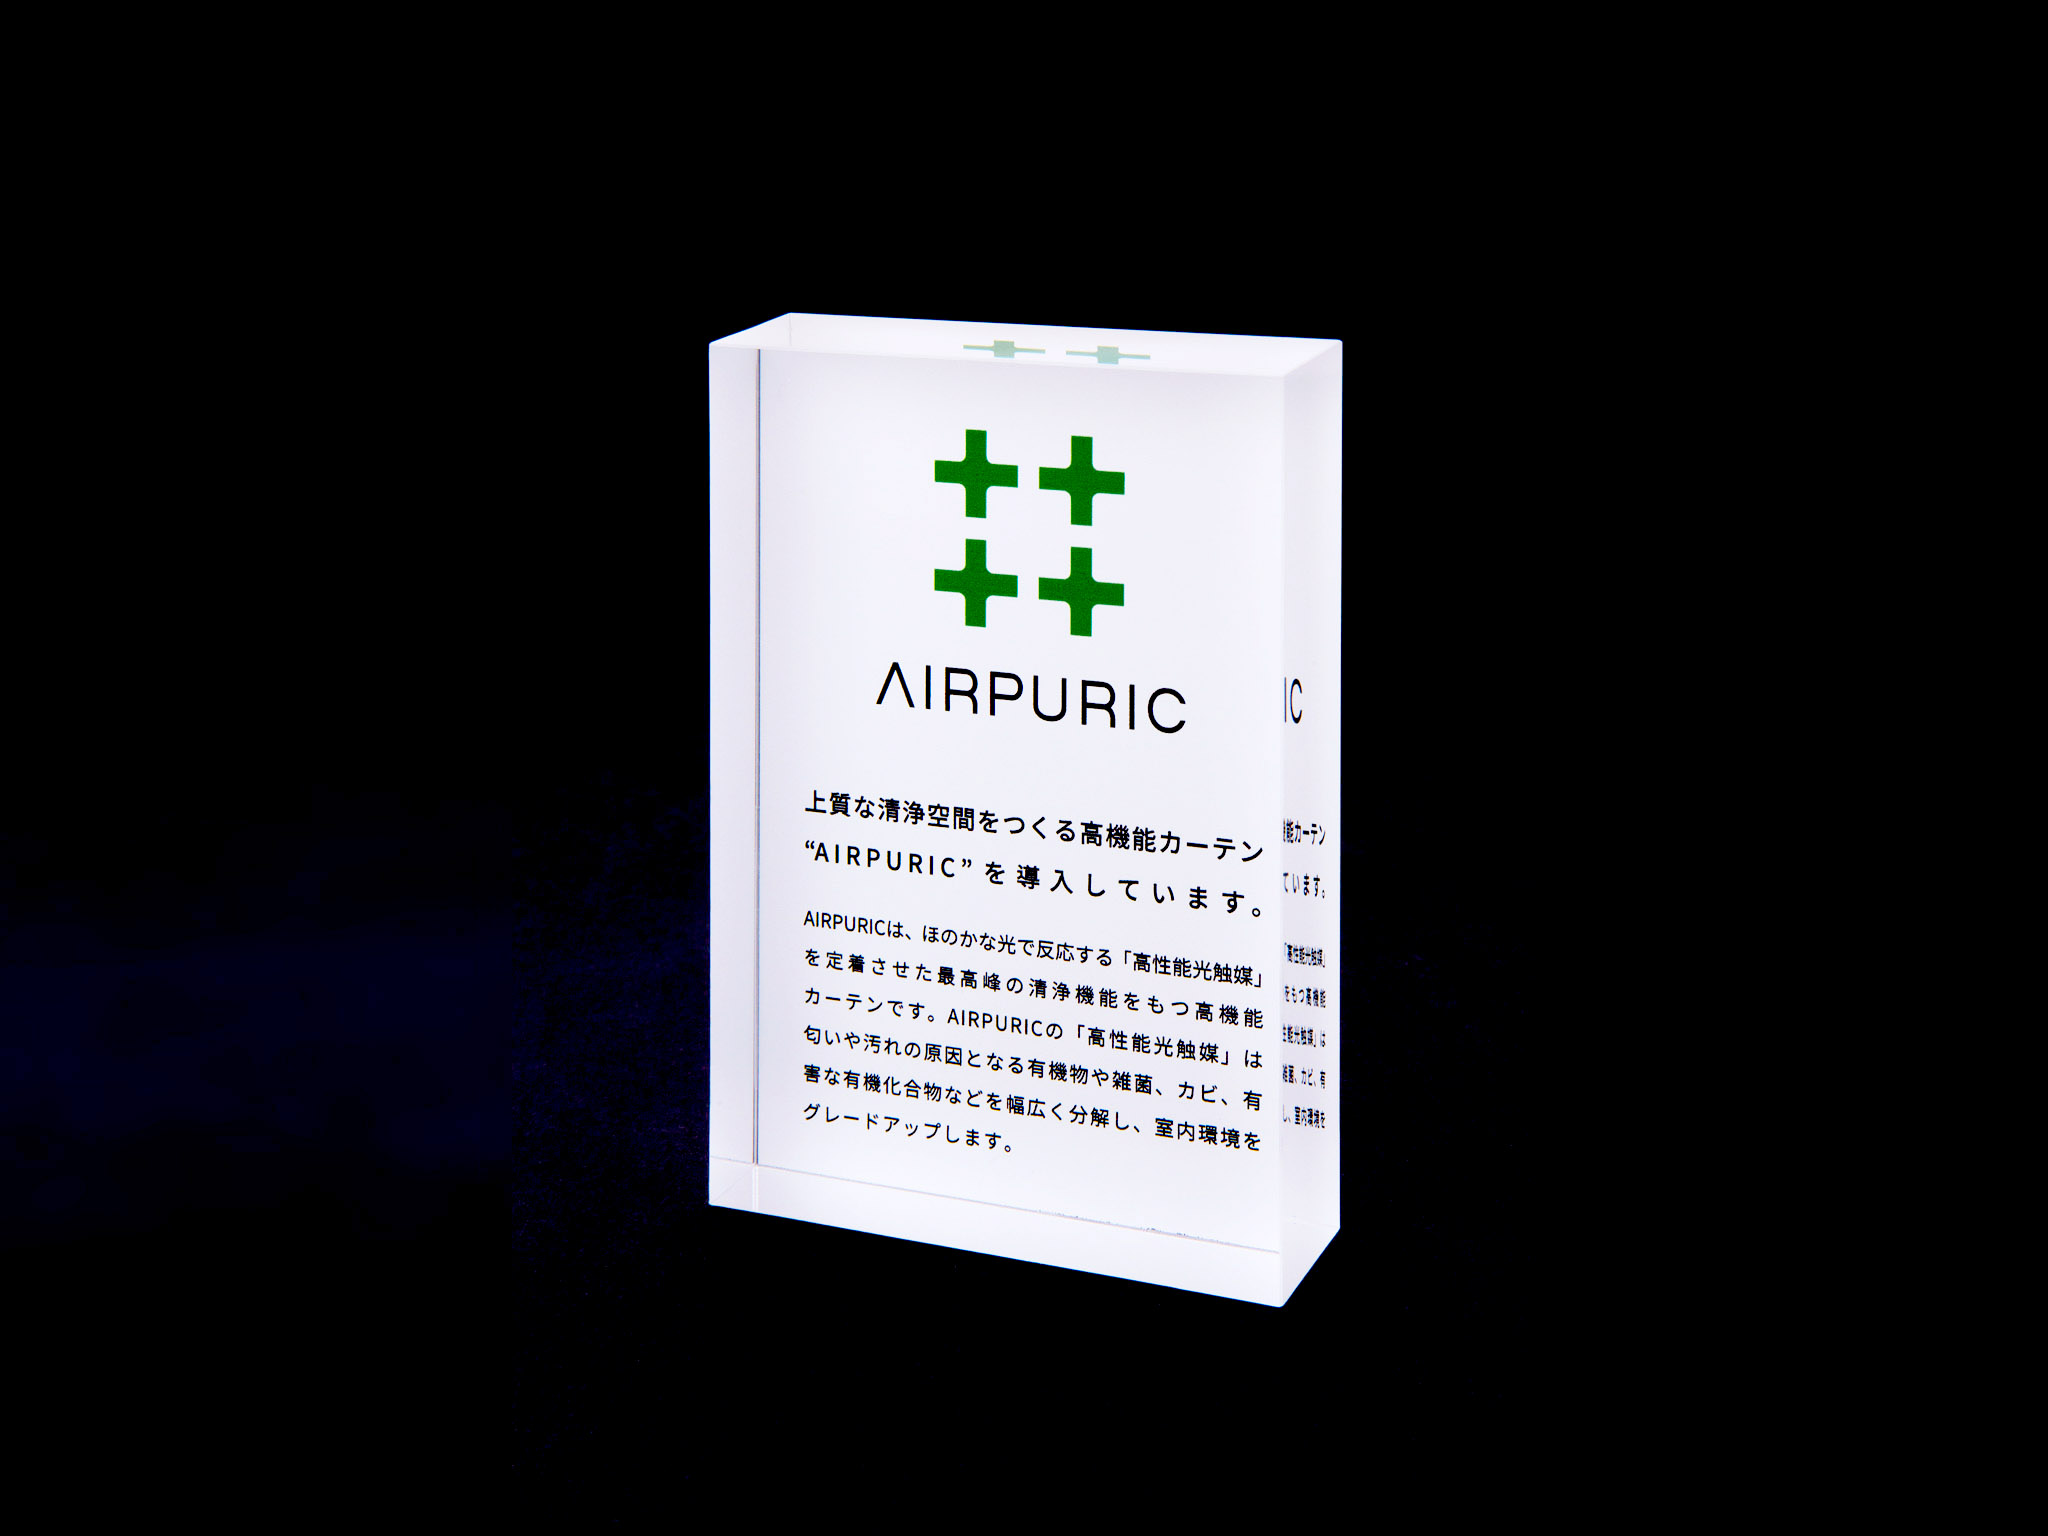 AIRPURIC Logo